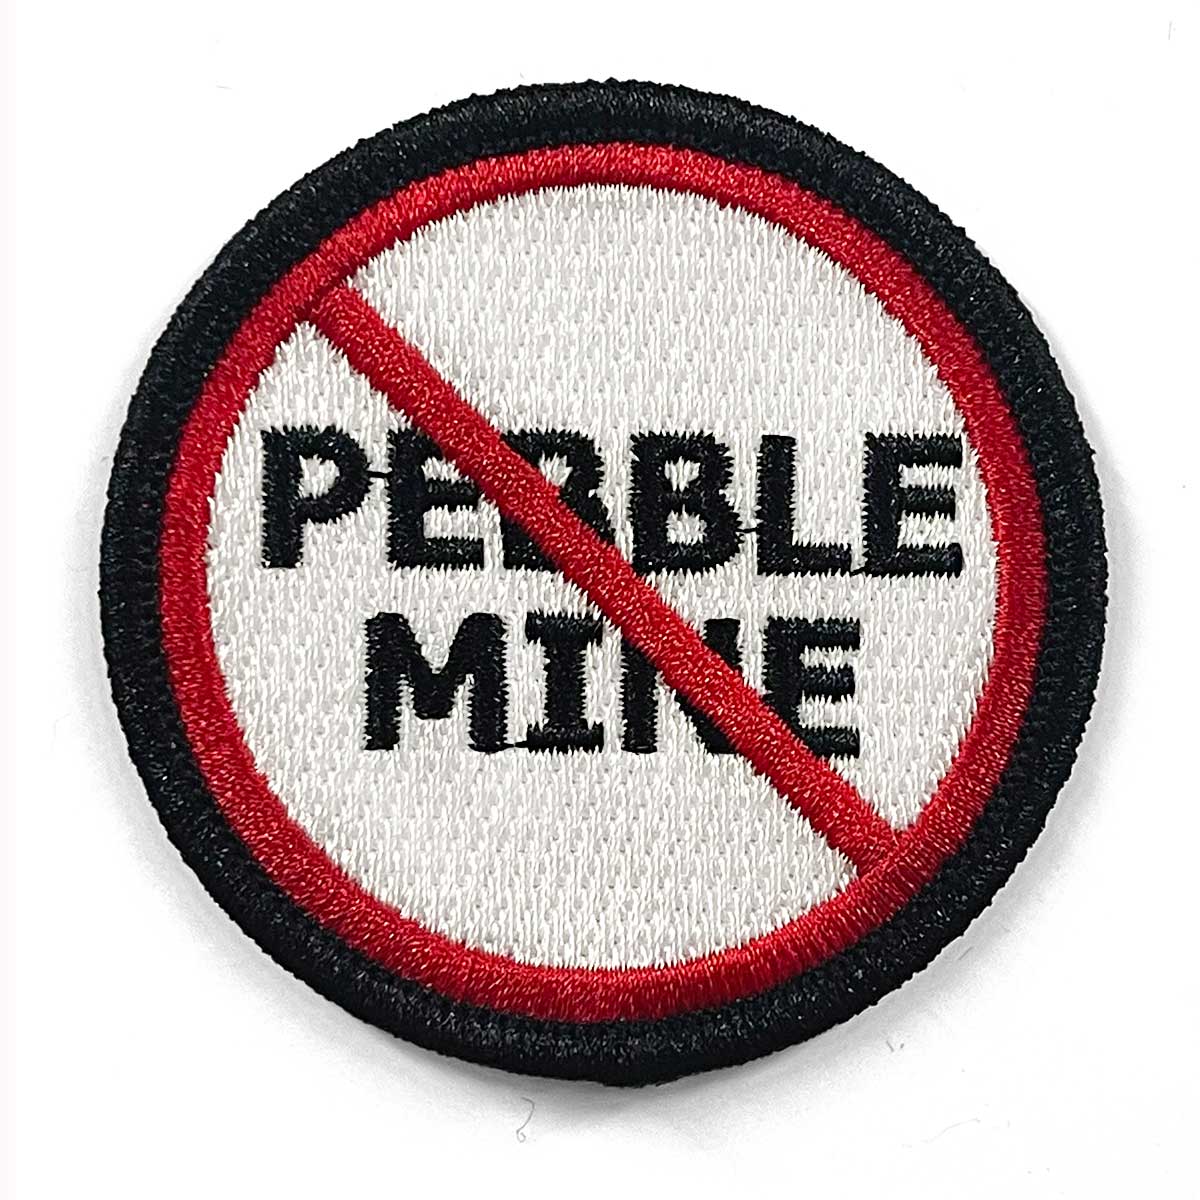 No Pebble Mine Patches